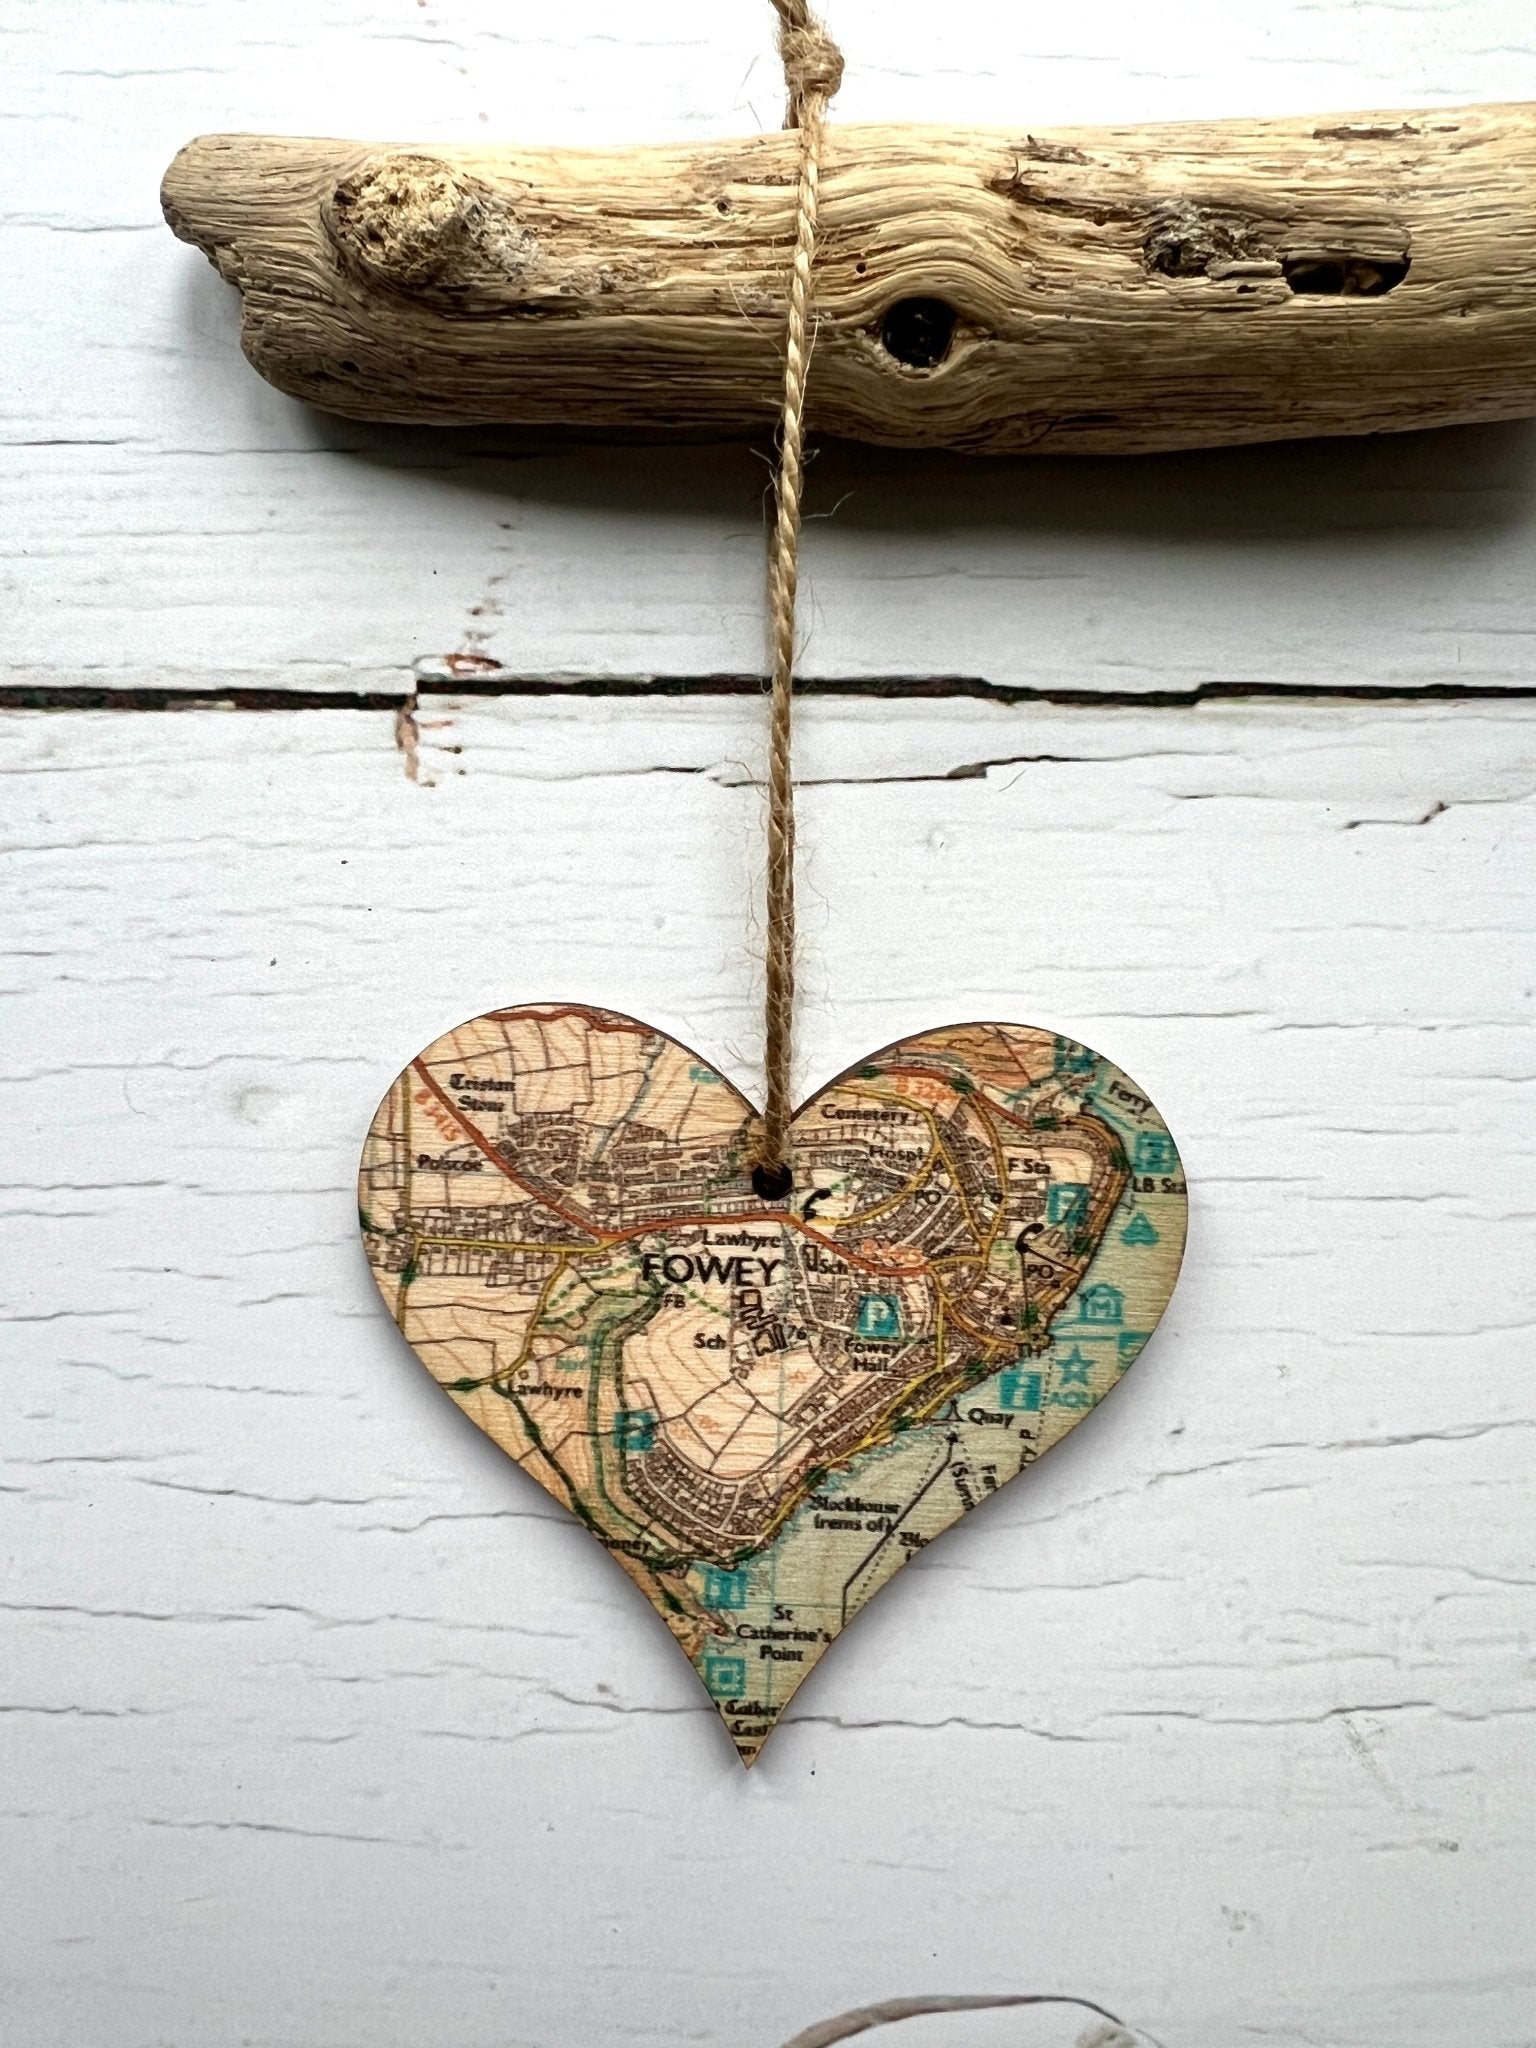 Wooden Fowey Heart Hanging Decoration - Readymoney Beach Shop